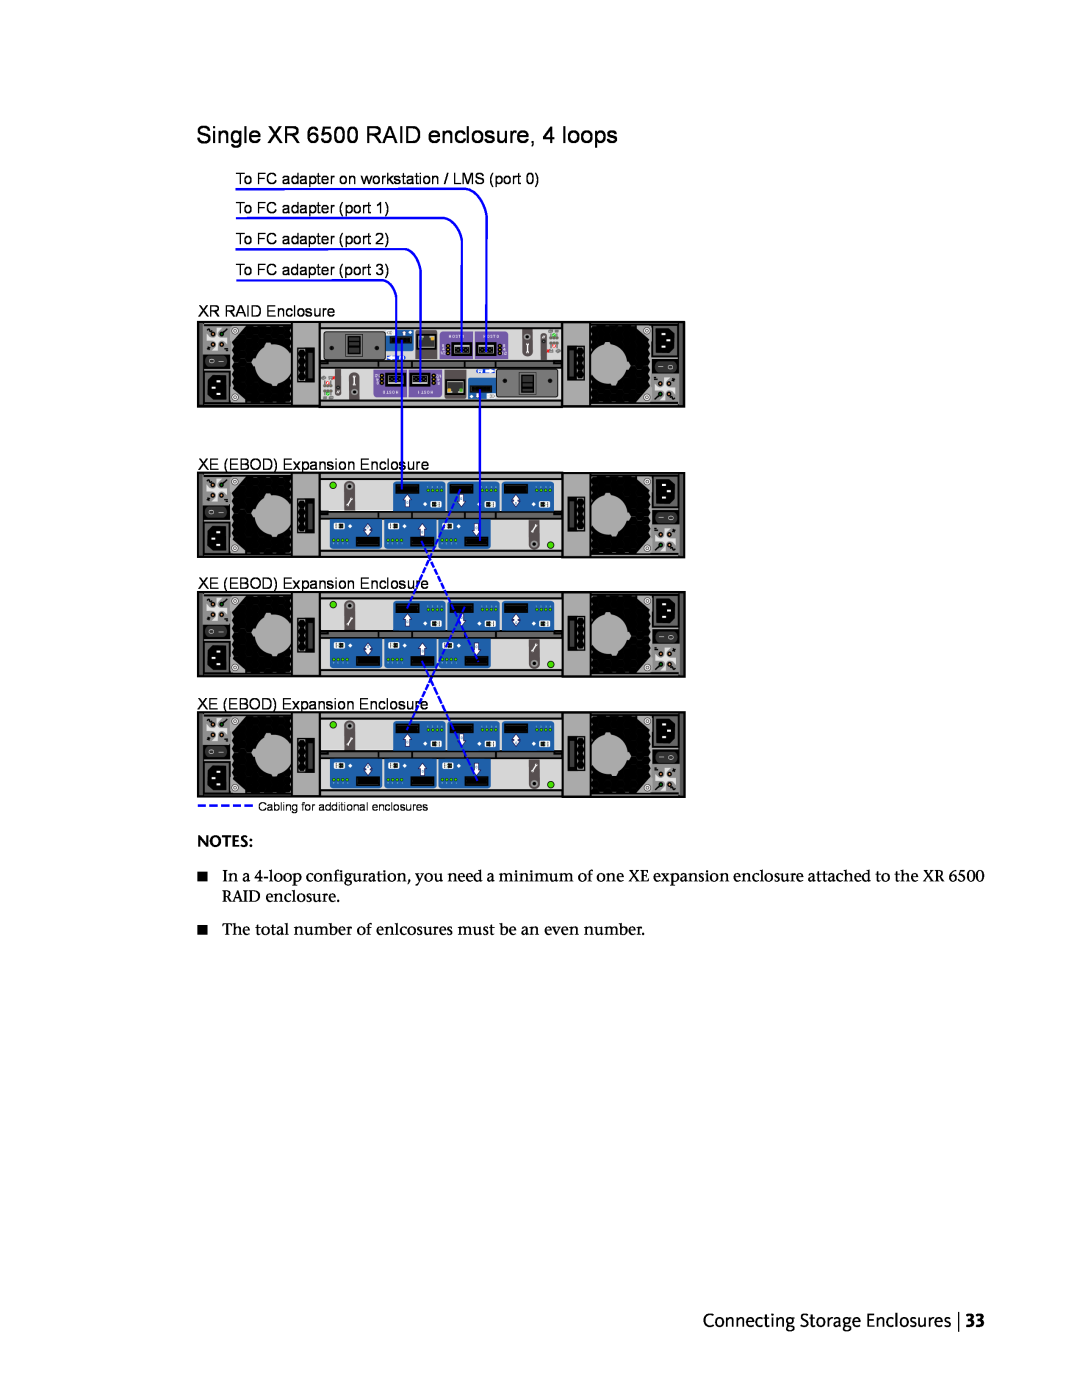 HP Z800 manual Single XR 6500 RAID enclosure, 4 loops, Connecting Storage Enclosures, XE EBOD Expansion Enclosure 